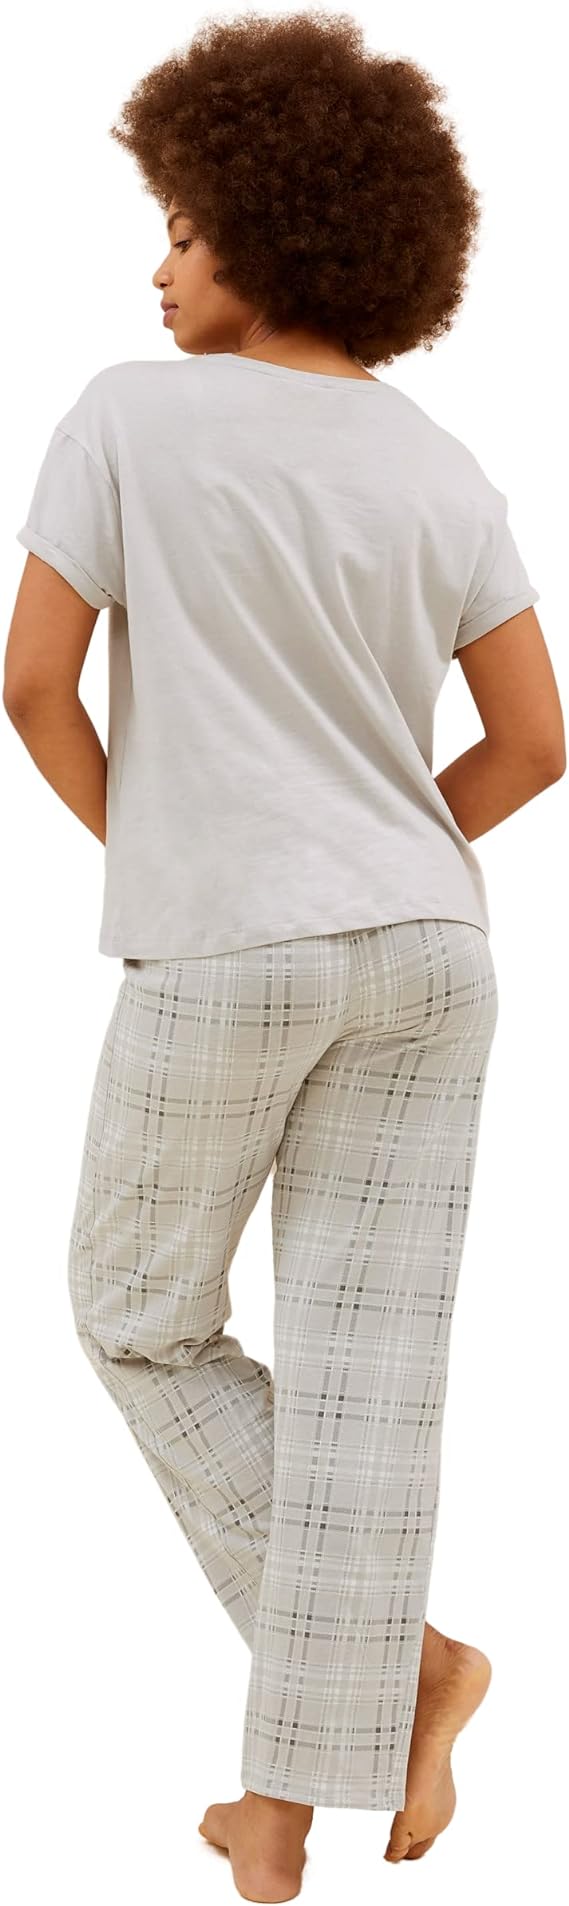 Women's Short Sleeve Plaid Pajama Set